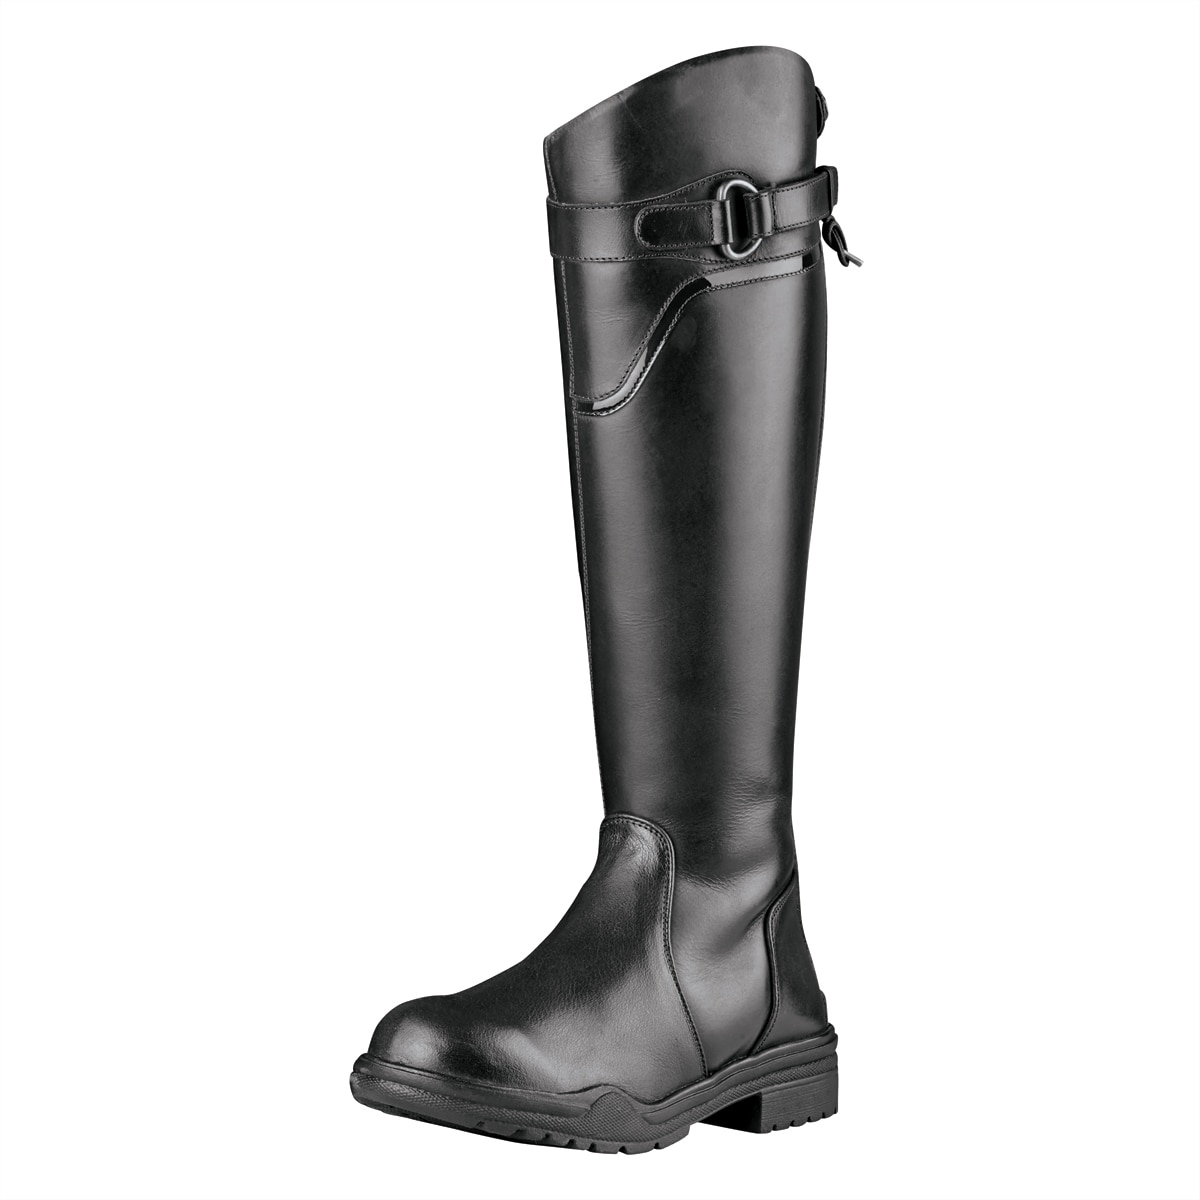 waterproof riding boots wide calf